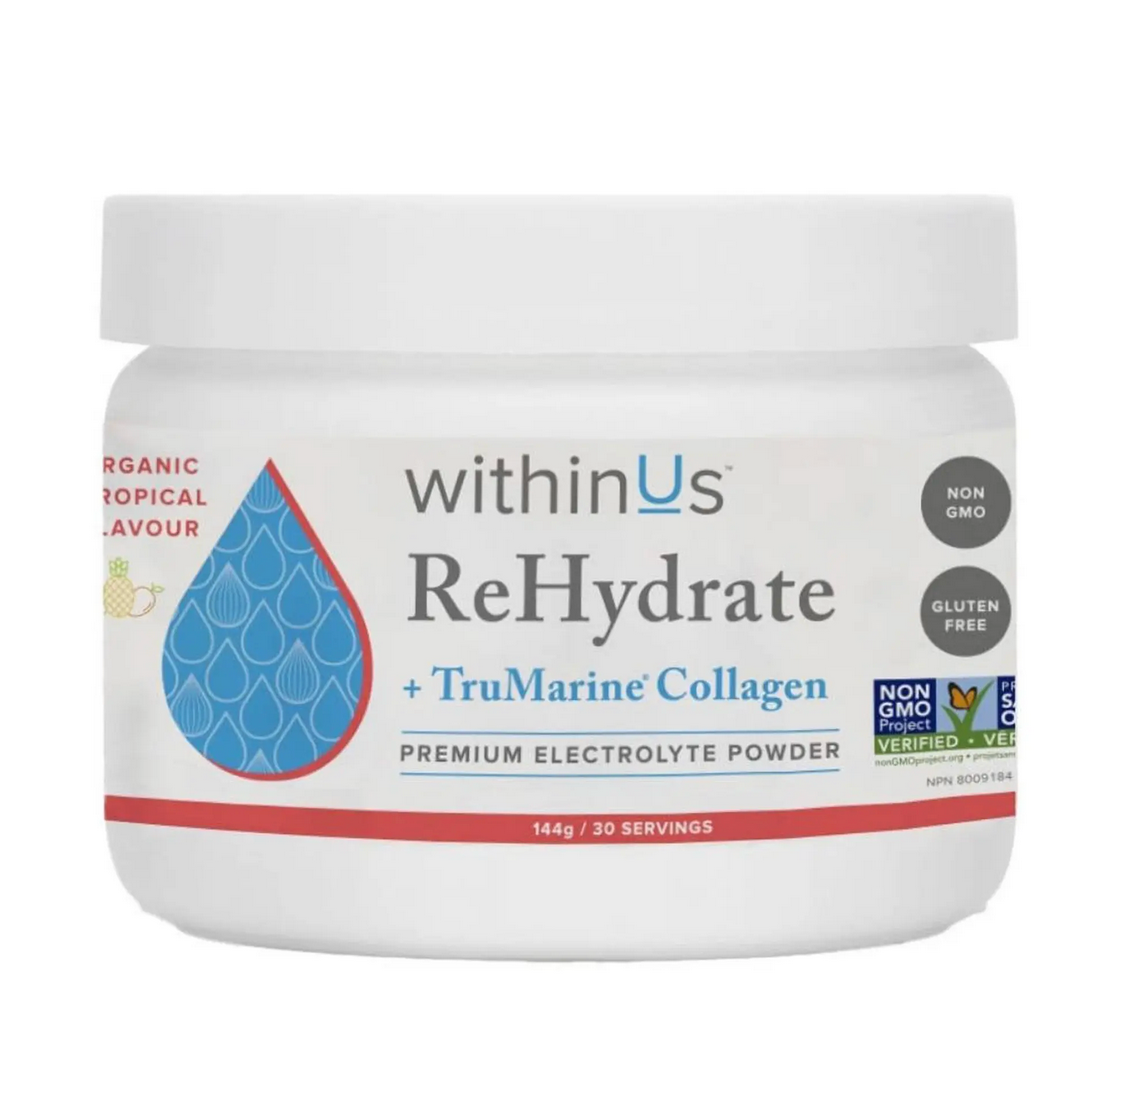 ReHydrate +TruMarine Collagen Jar - TROPICAL